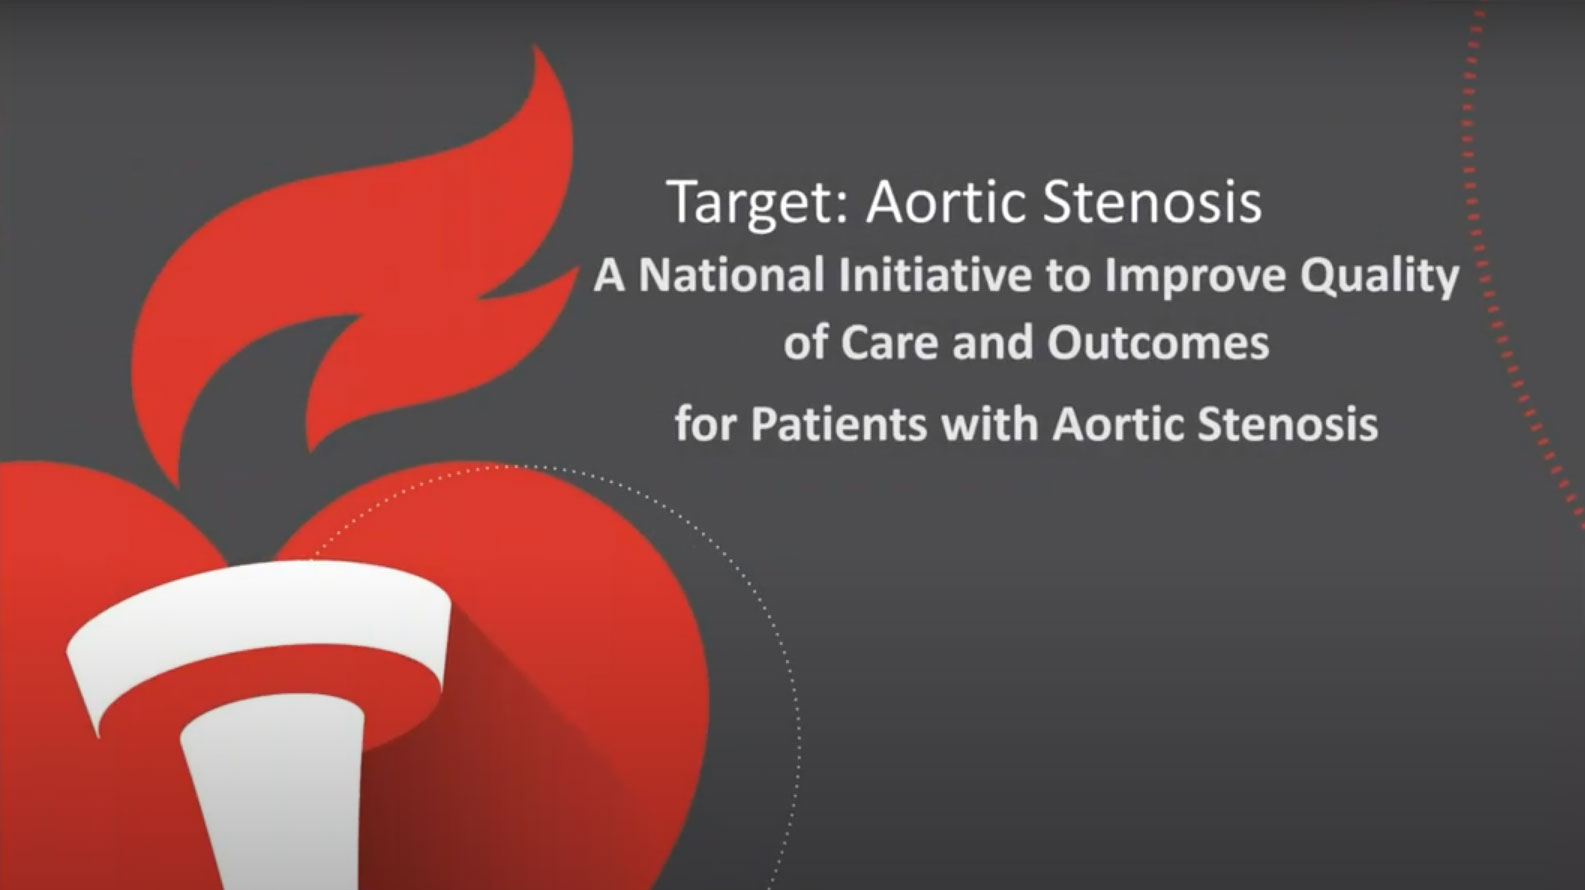 Target Aortic Stenosis Screen shot to webinar image